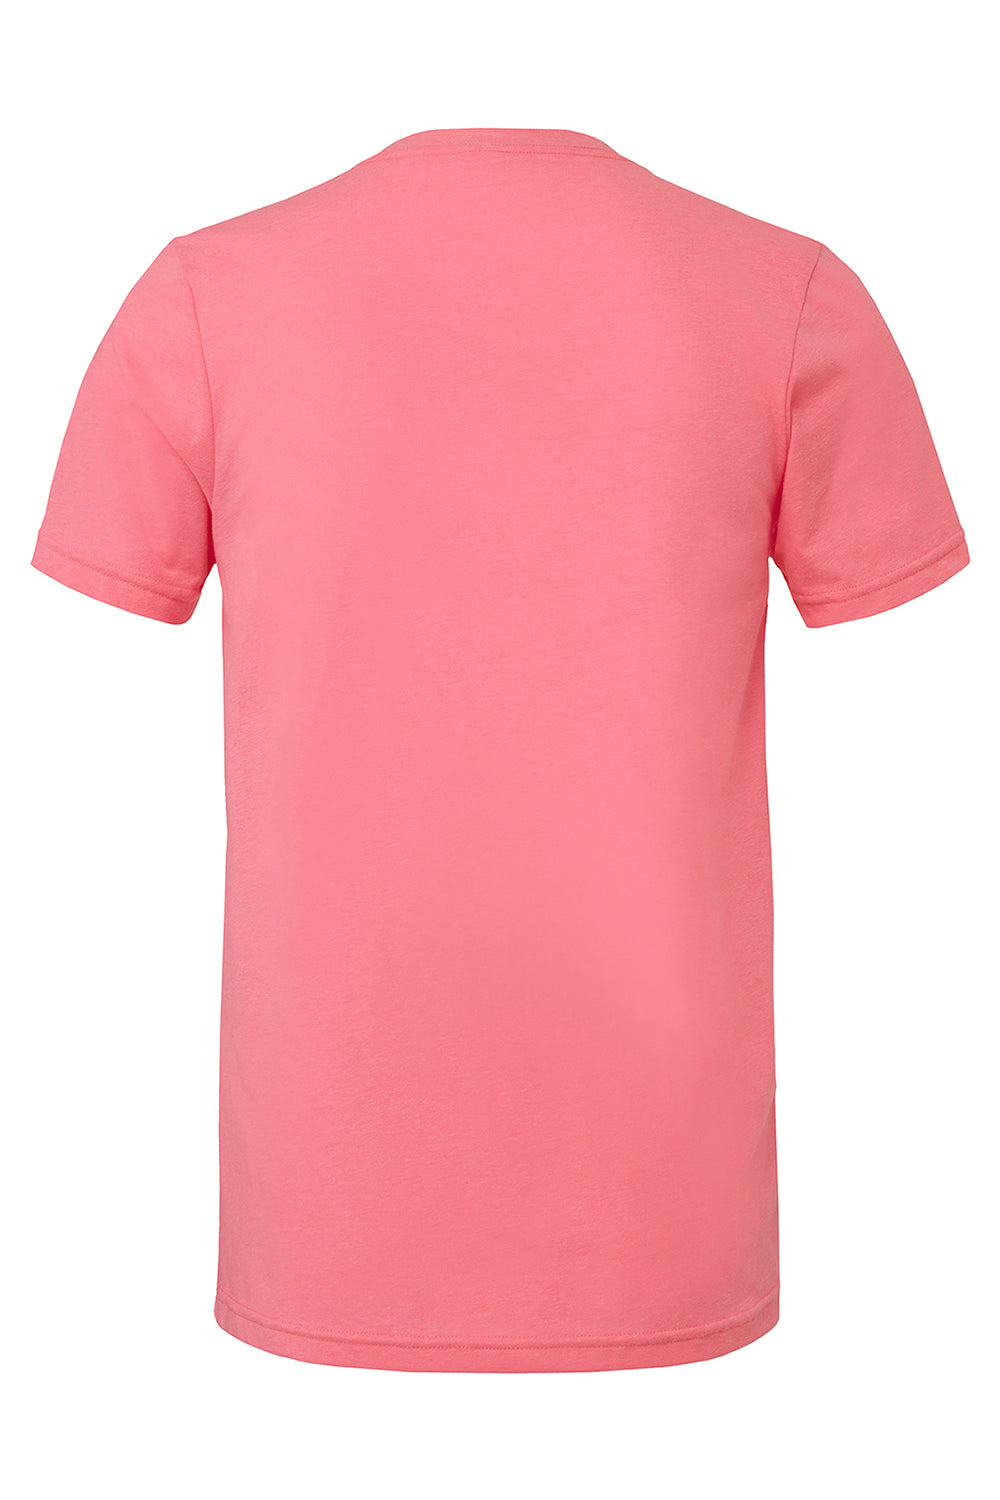 Bella + Canvas BC3005/3005/3655C Mens Jersey Short Sleeve V-Neck T-Shirt Neon Pink Flat Front